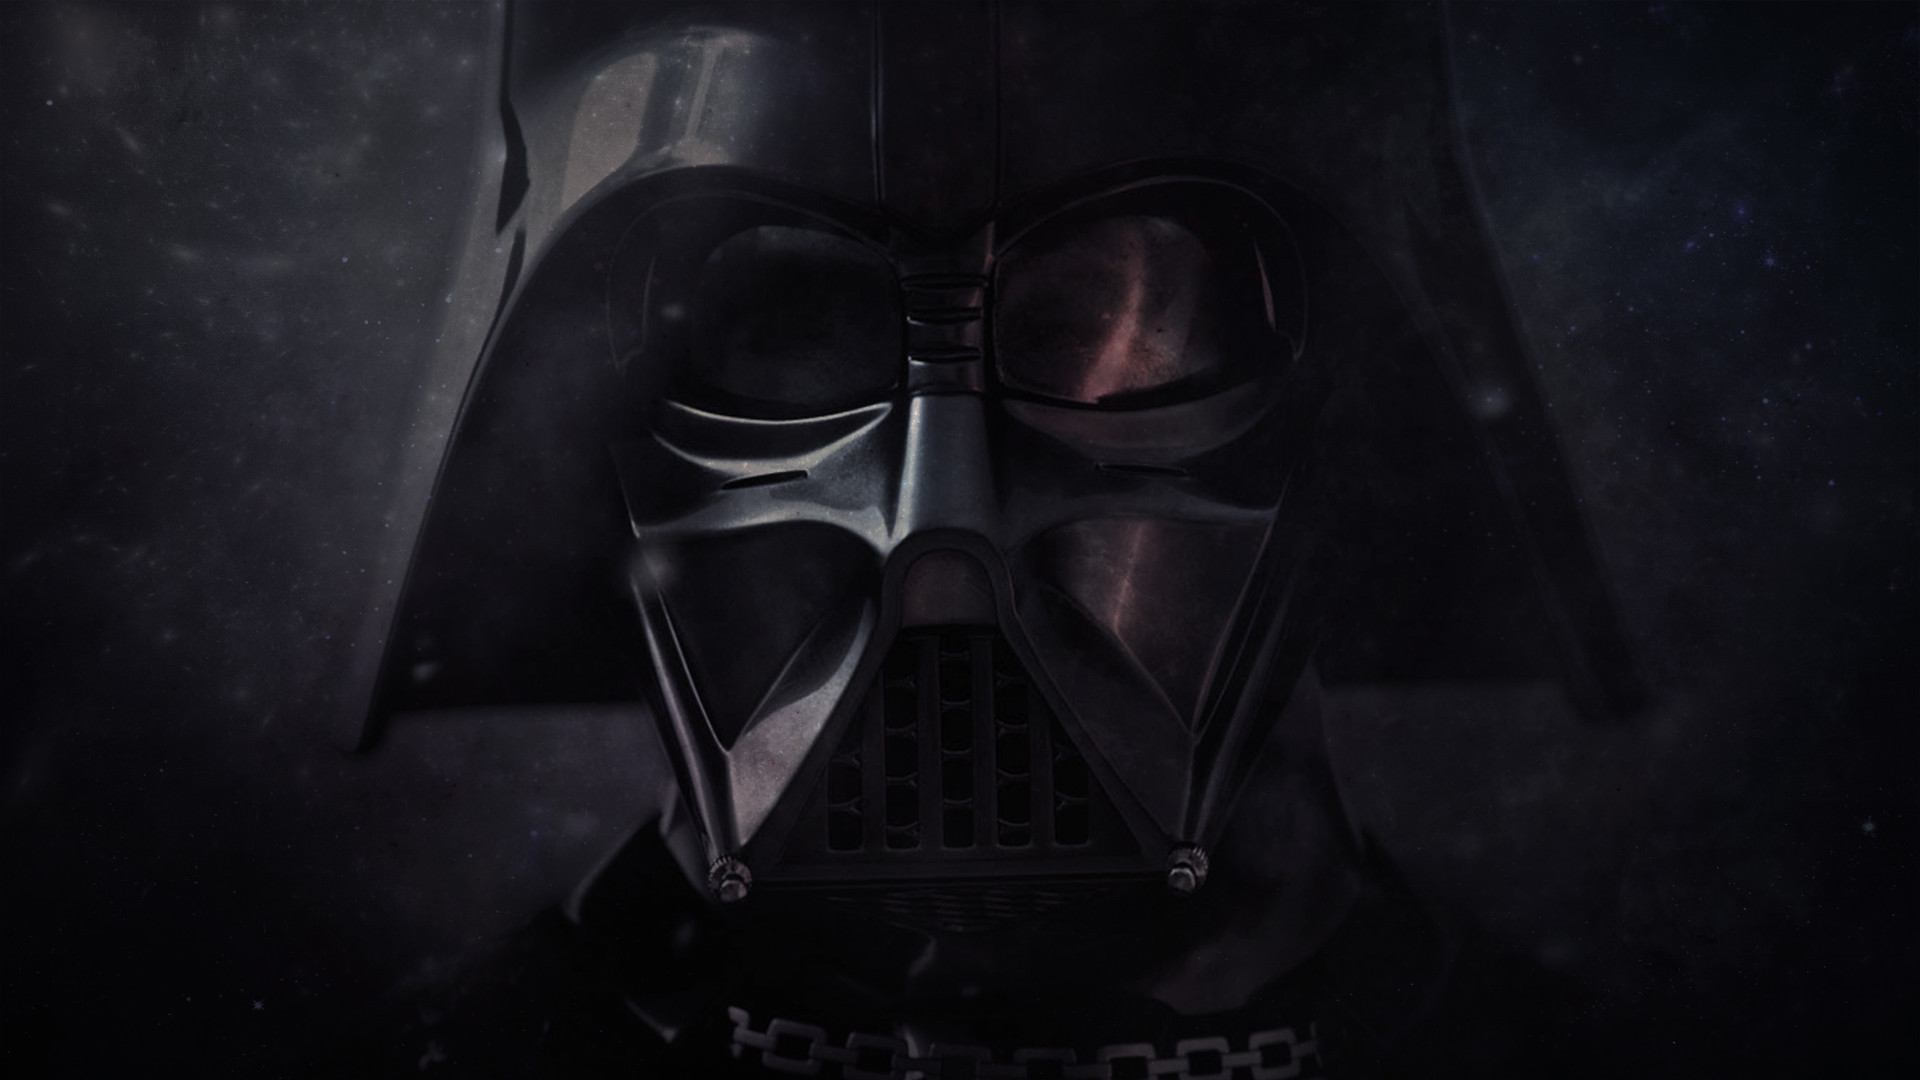 Darth Vader-Inspired PS4 System Coming This November